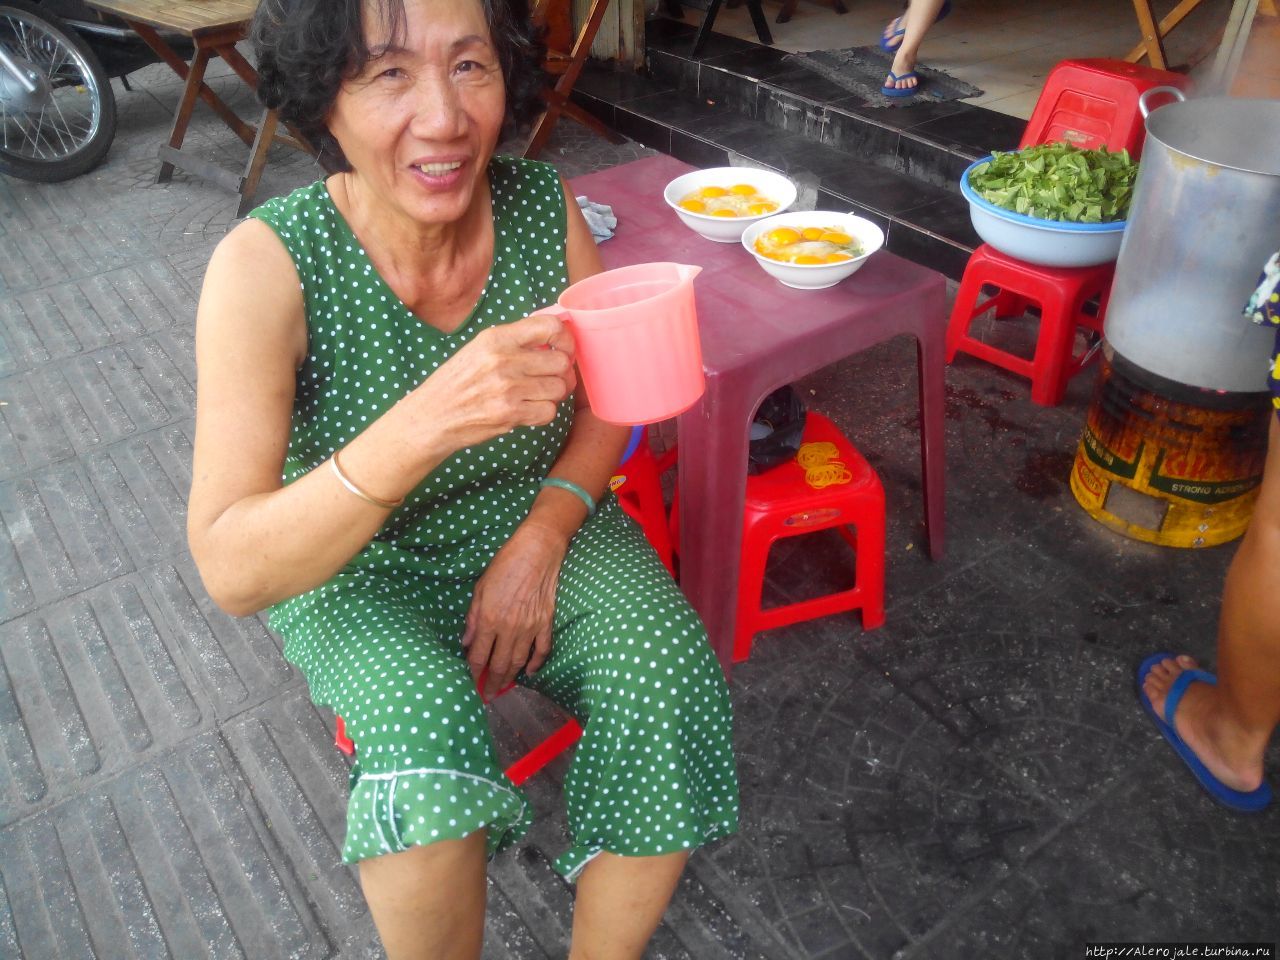 Сайгон — проверим свое здоровье Хошимин, Вьетнам